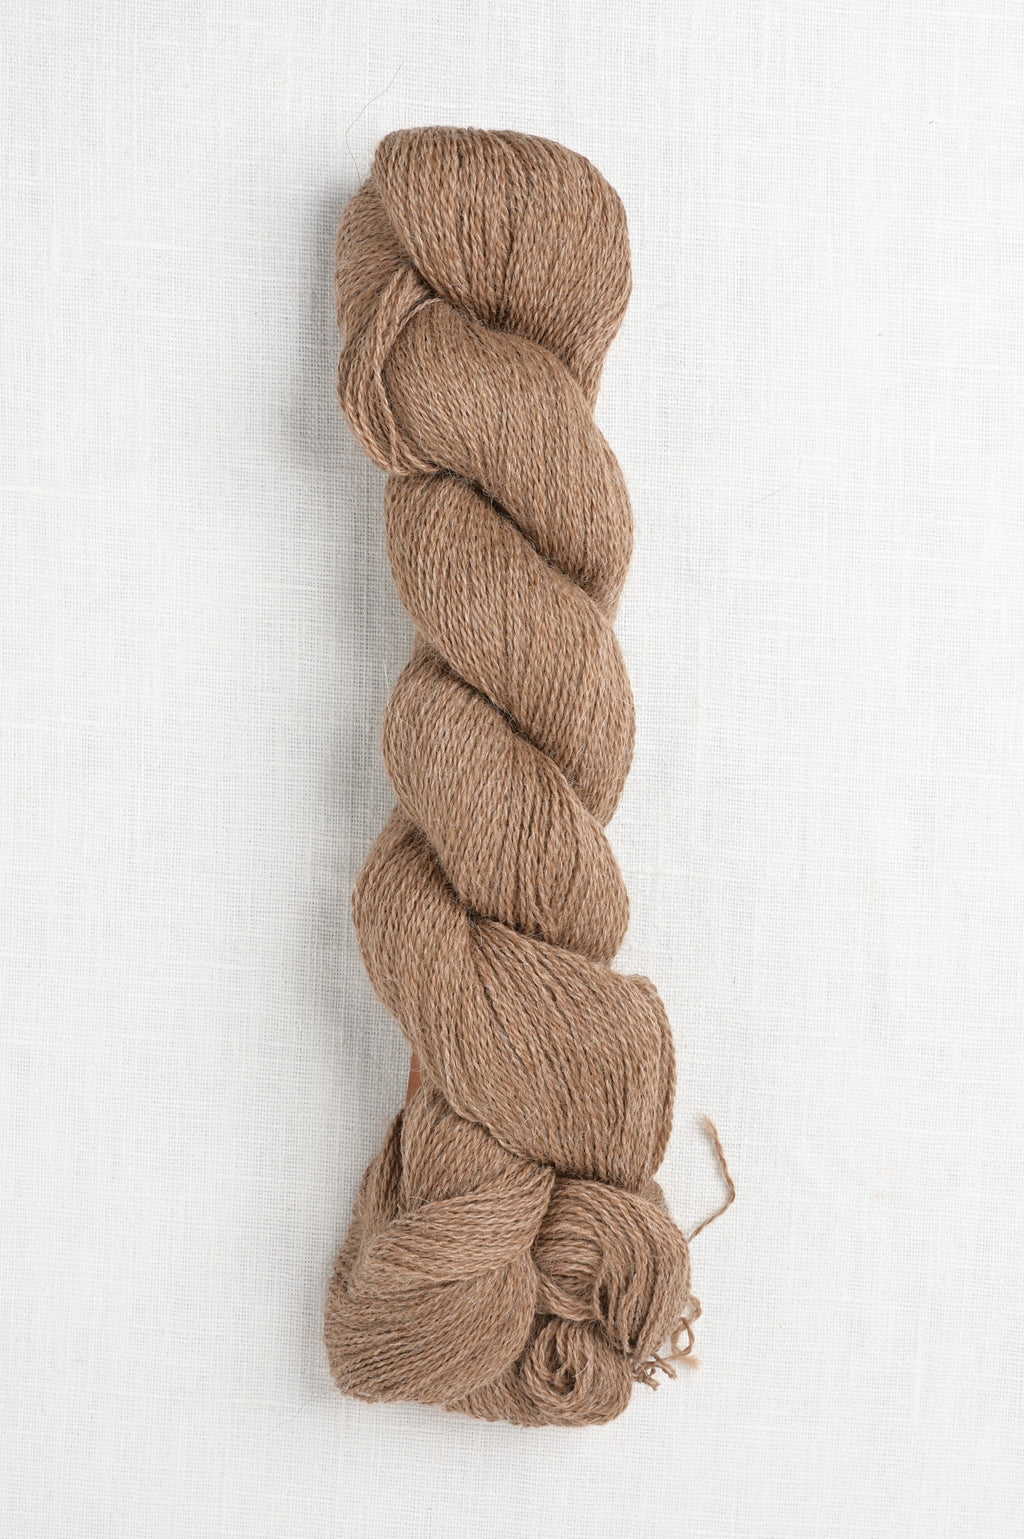 Topline elastic alpaca wool yarn for knitting China Manufacturer